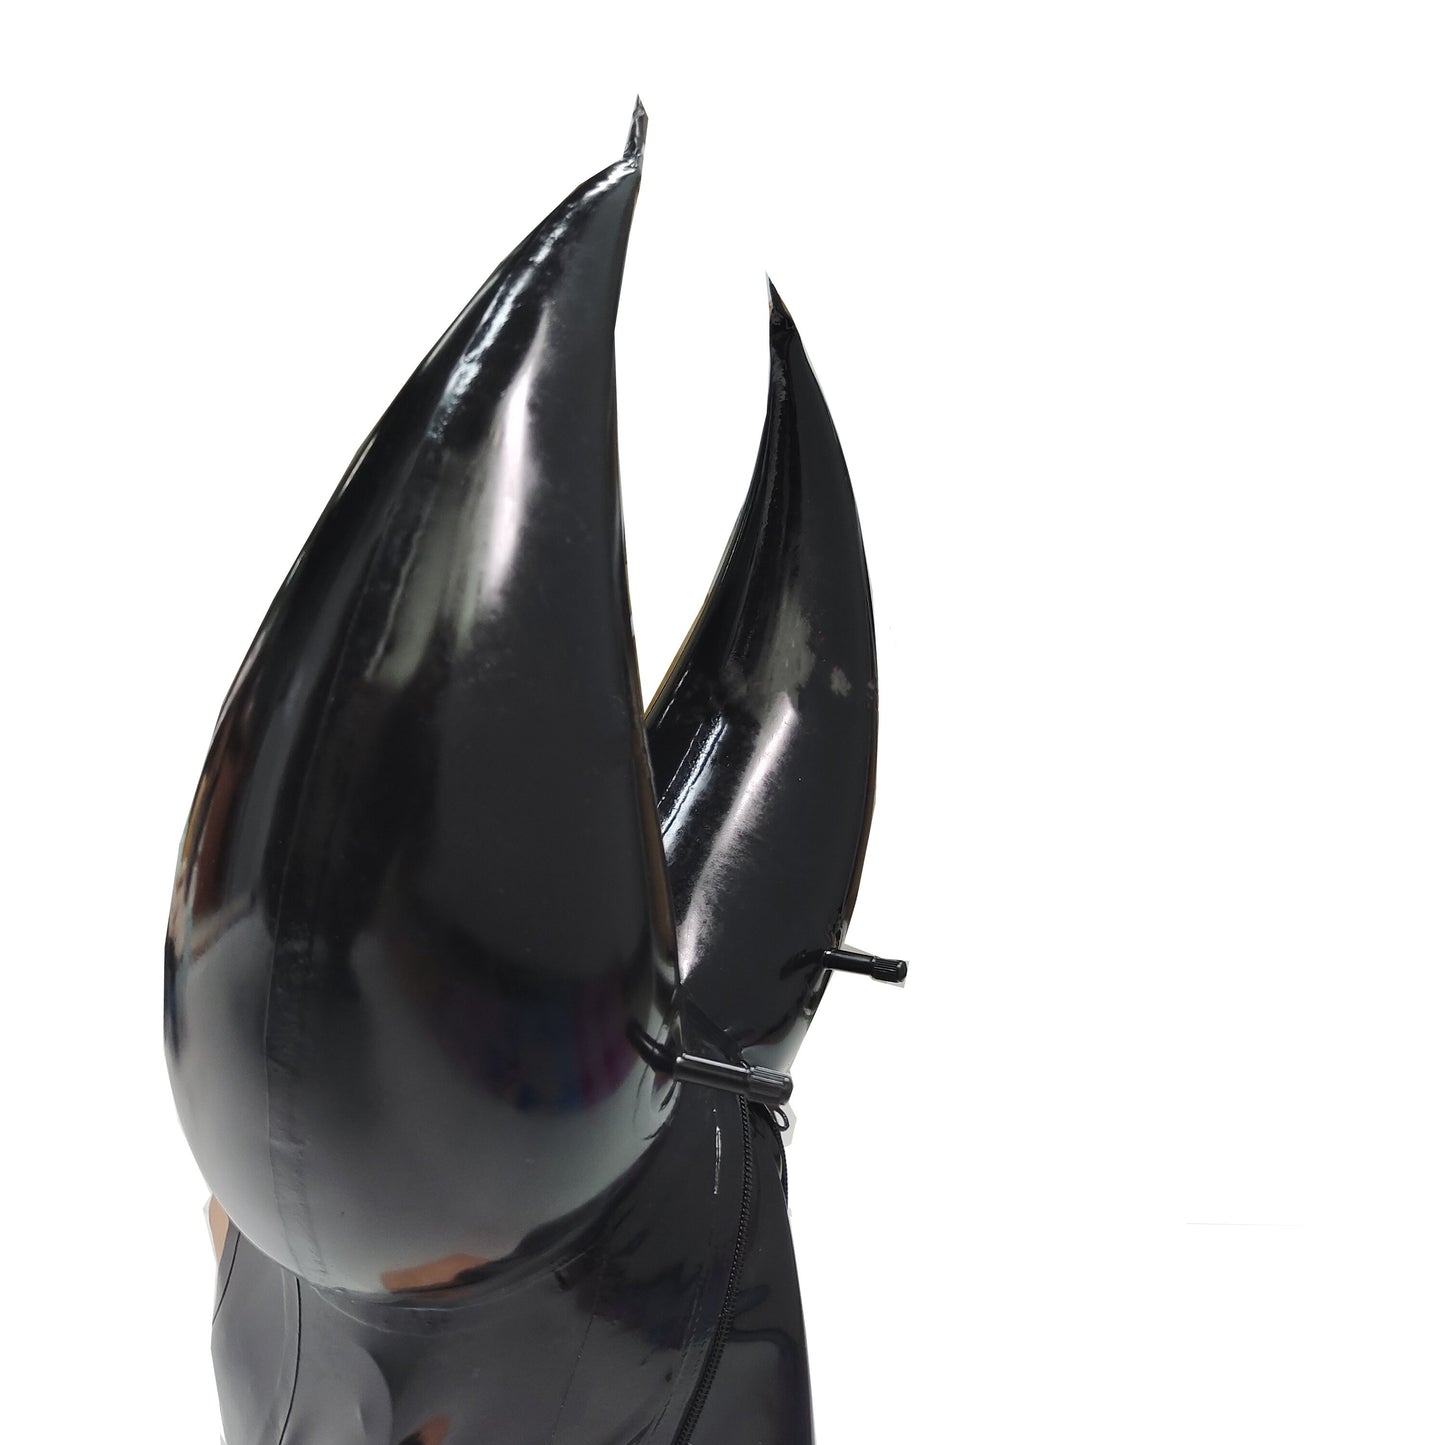 Unisex Inflatable Head Mask